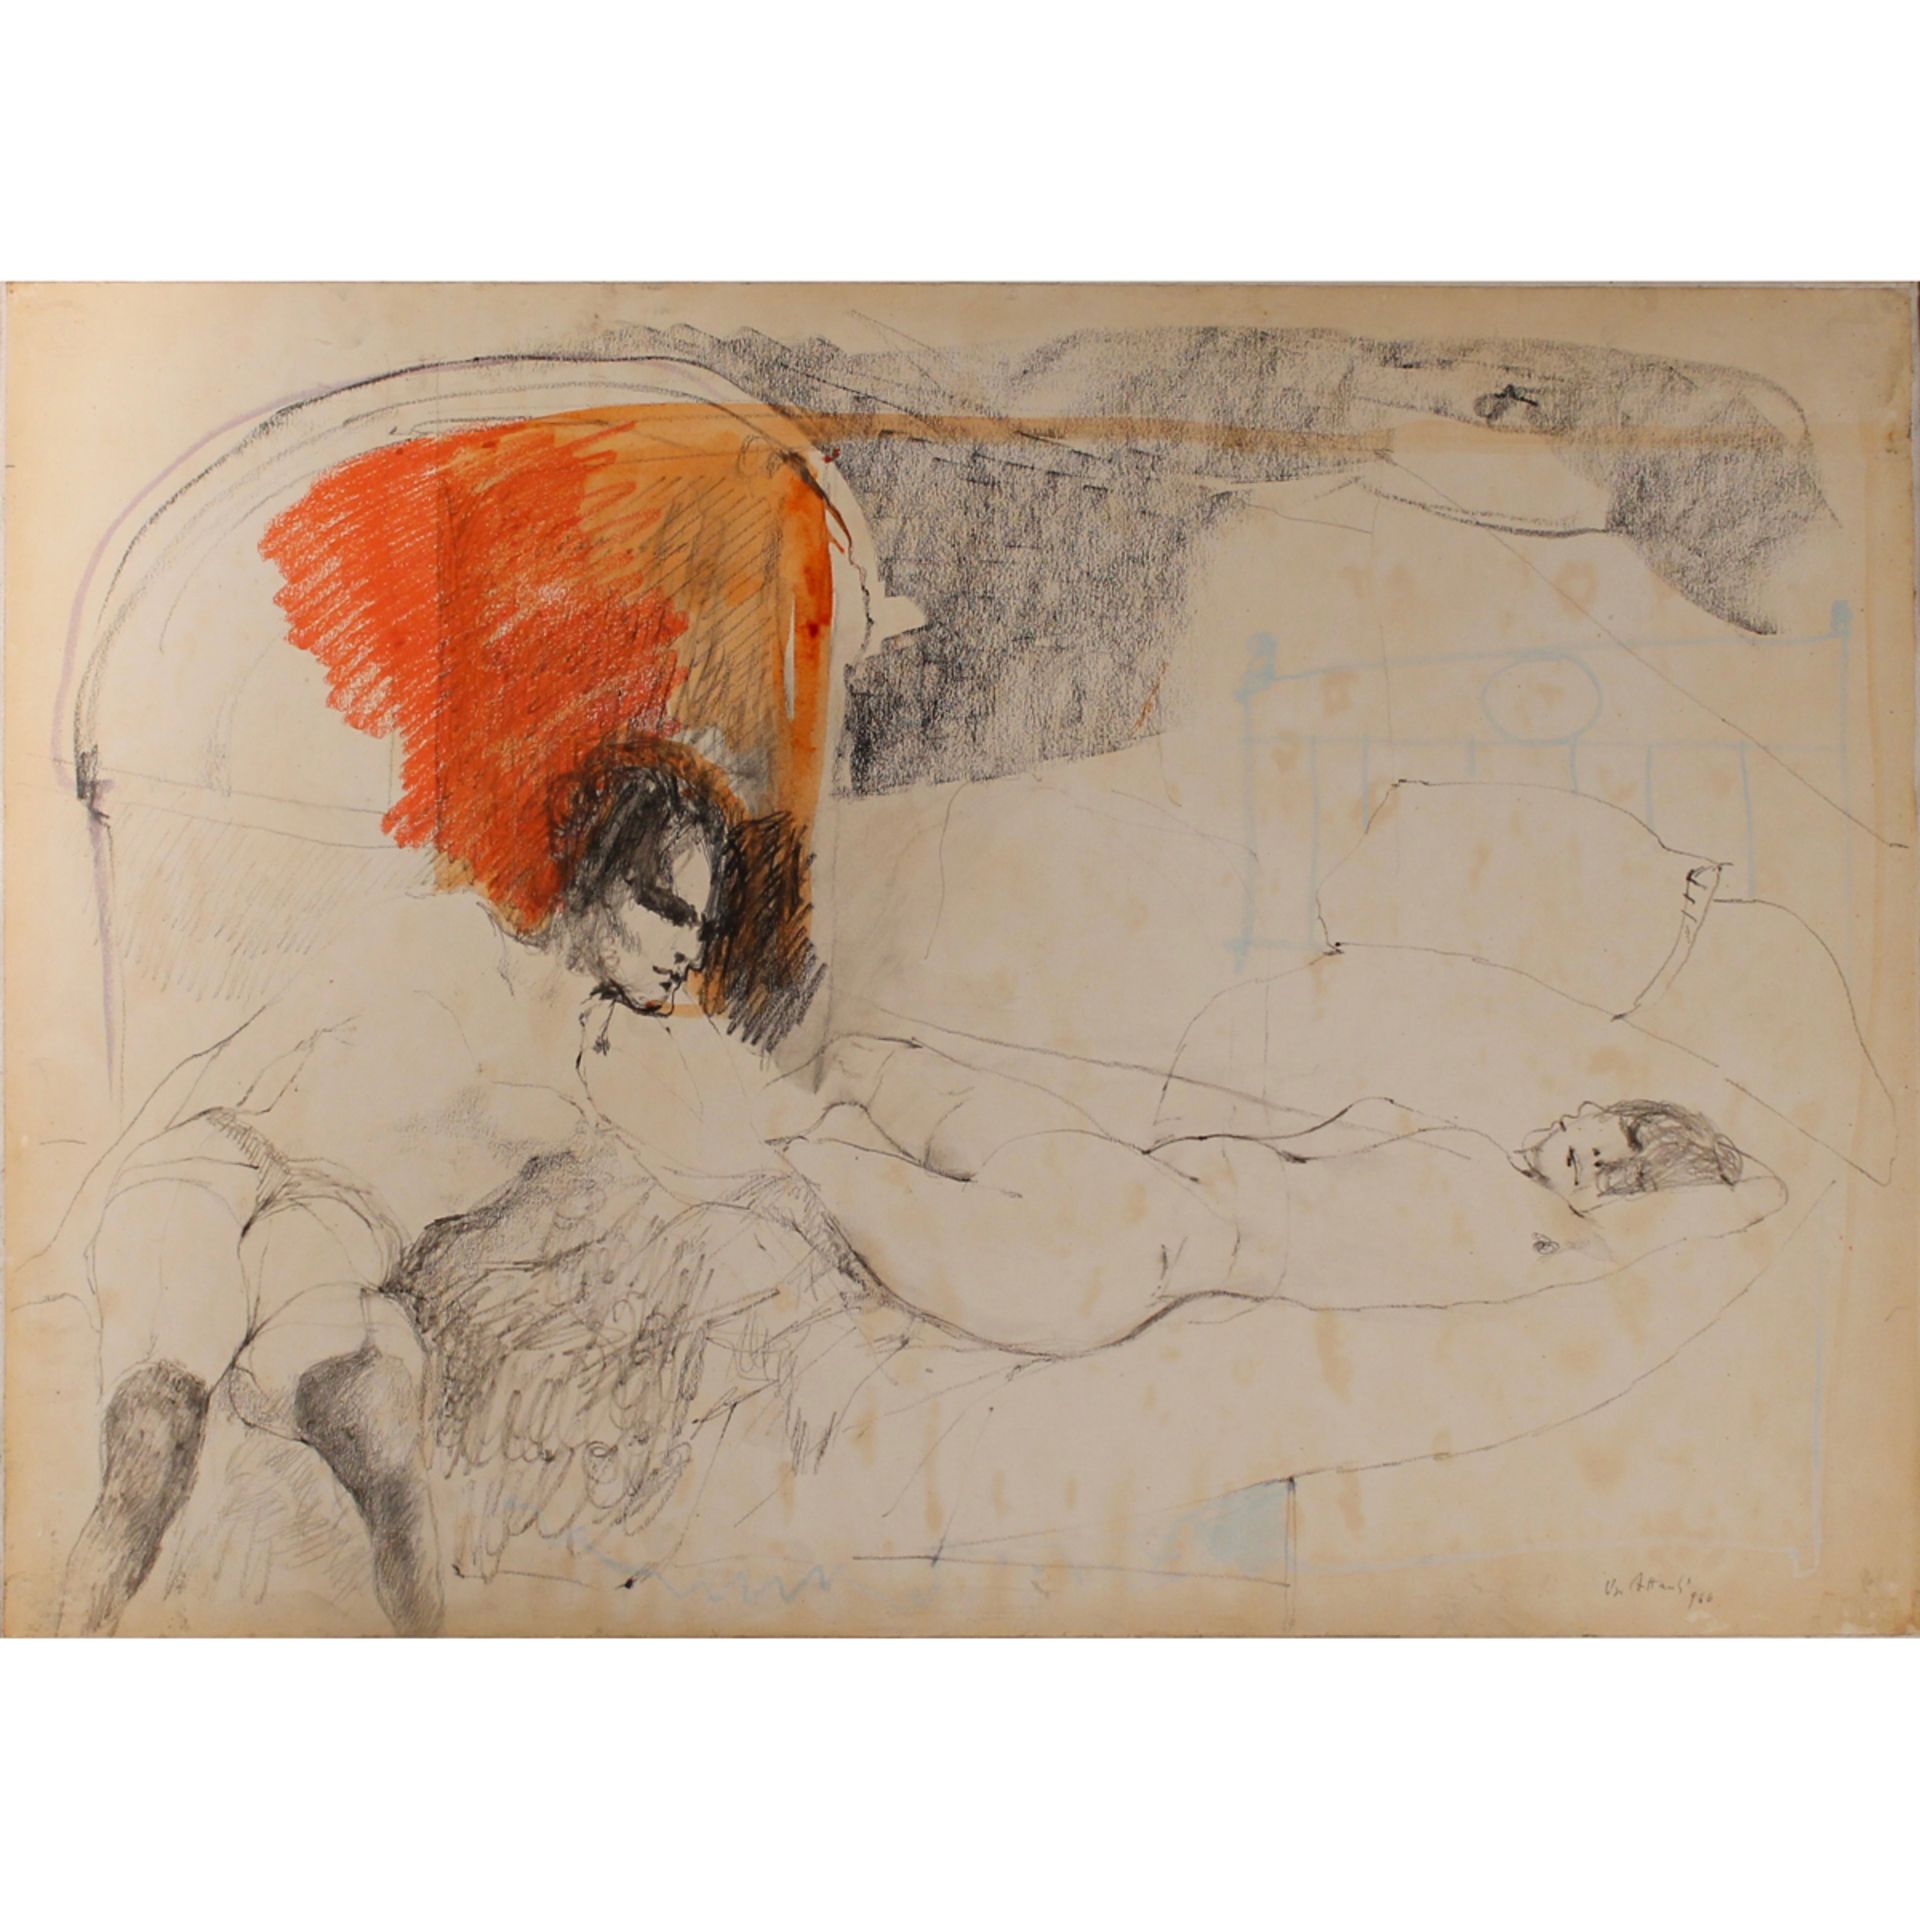 UGO ATTARDI (1923/2006) "Nudi di donne"-"Nudes of women"